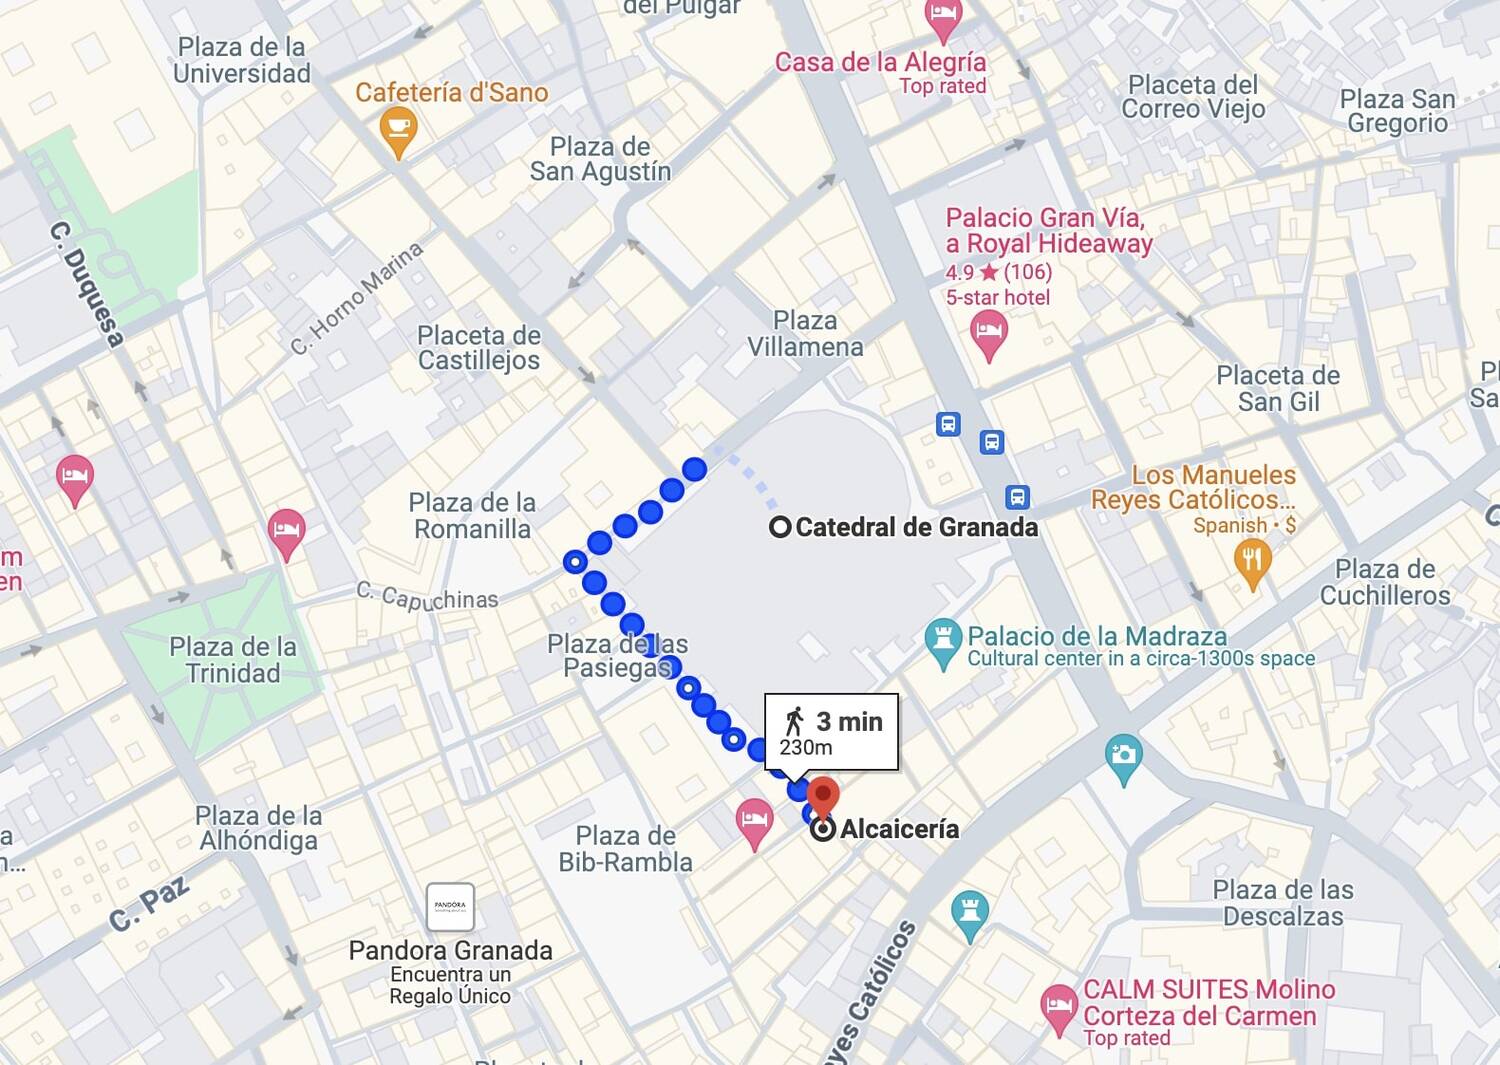 Alcaiceria Market location in Granada